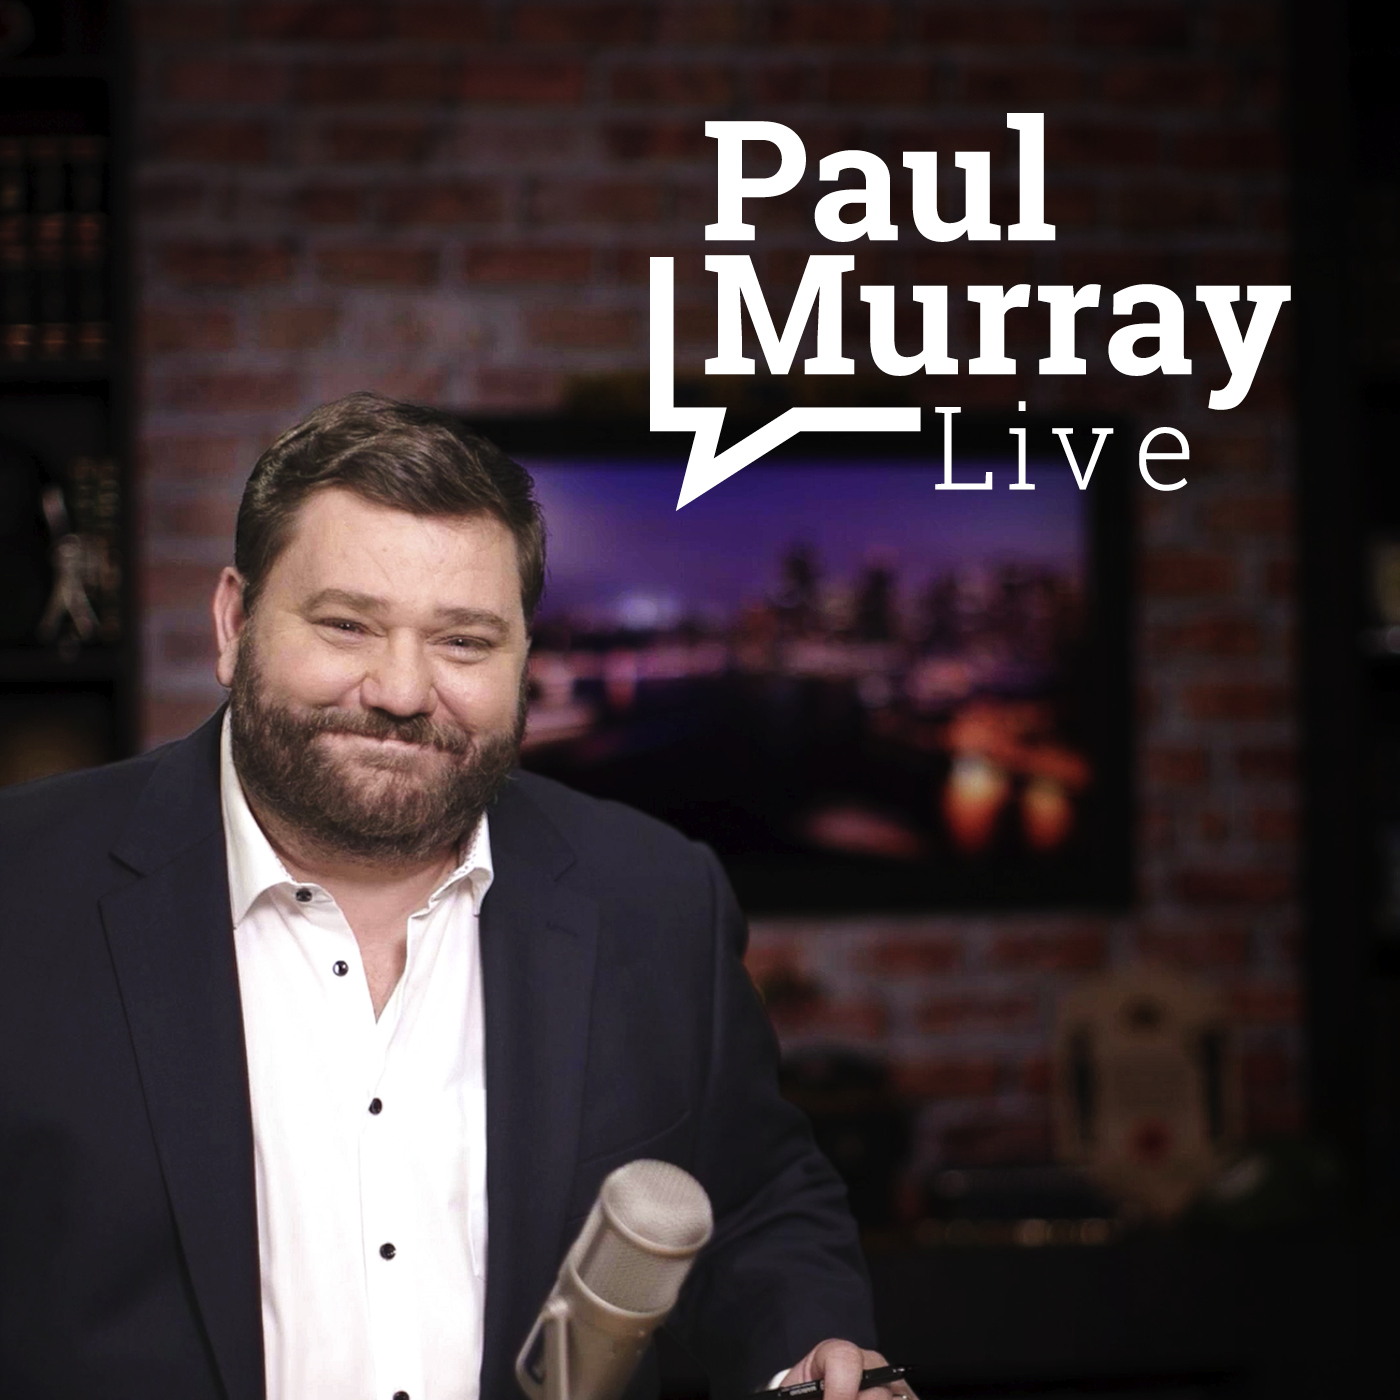 Paul Murray Live : Our Town Bathurst, Thursday 25th November